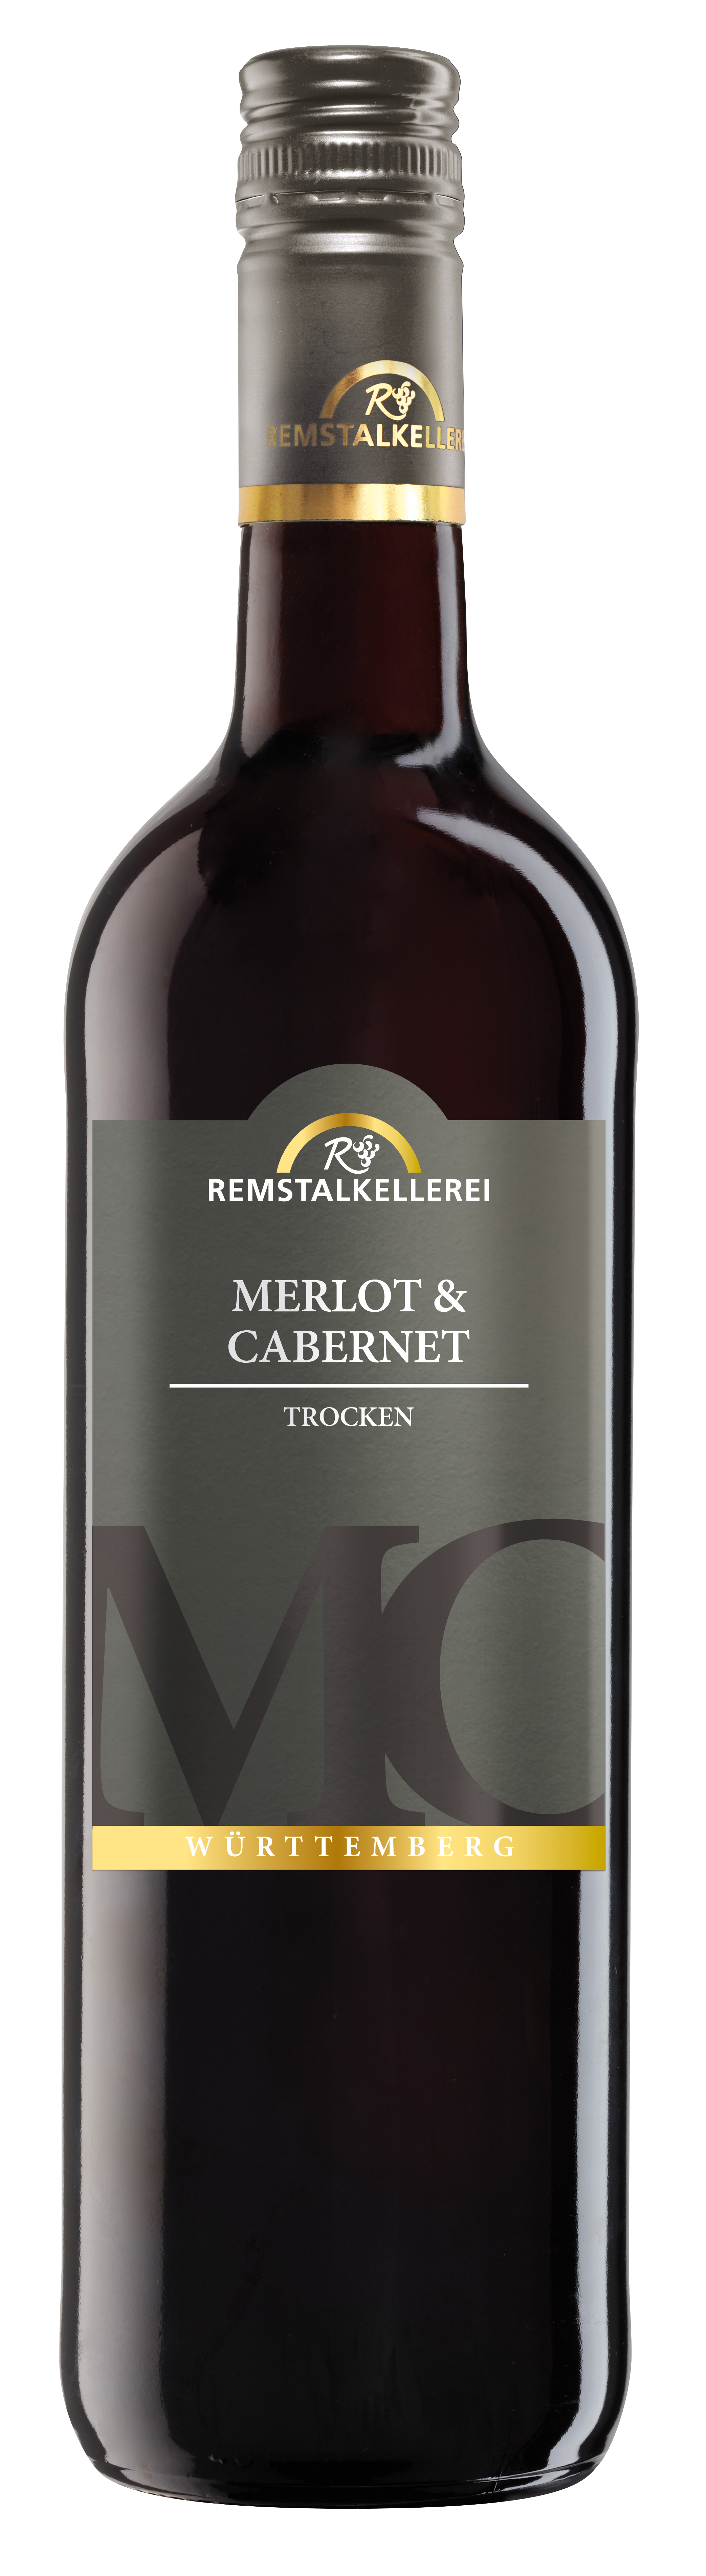 Merlot & Cabernet "MC" trocken